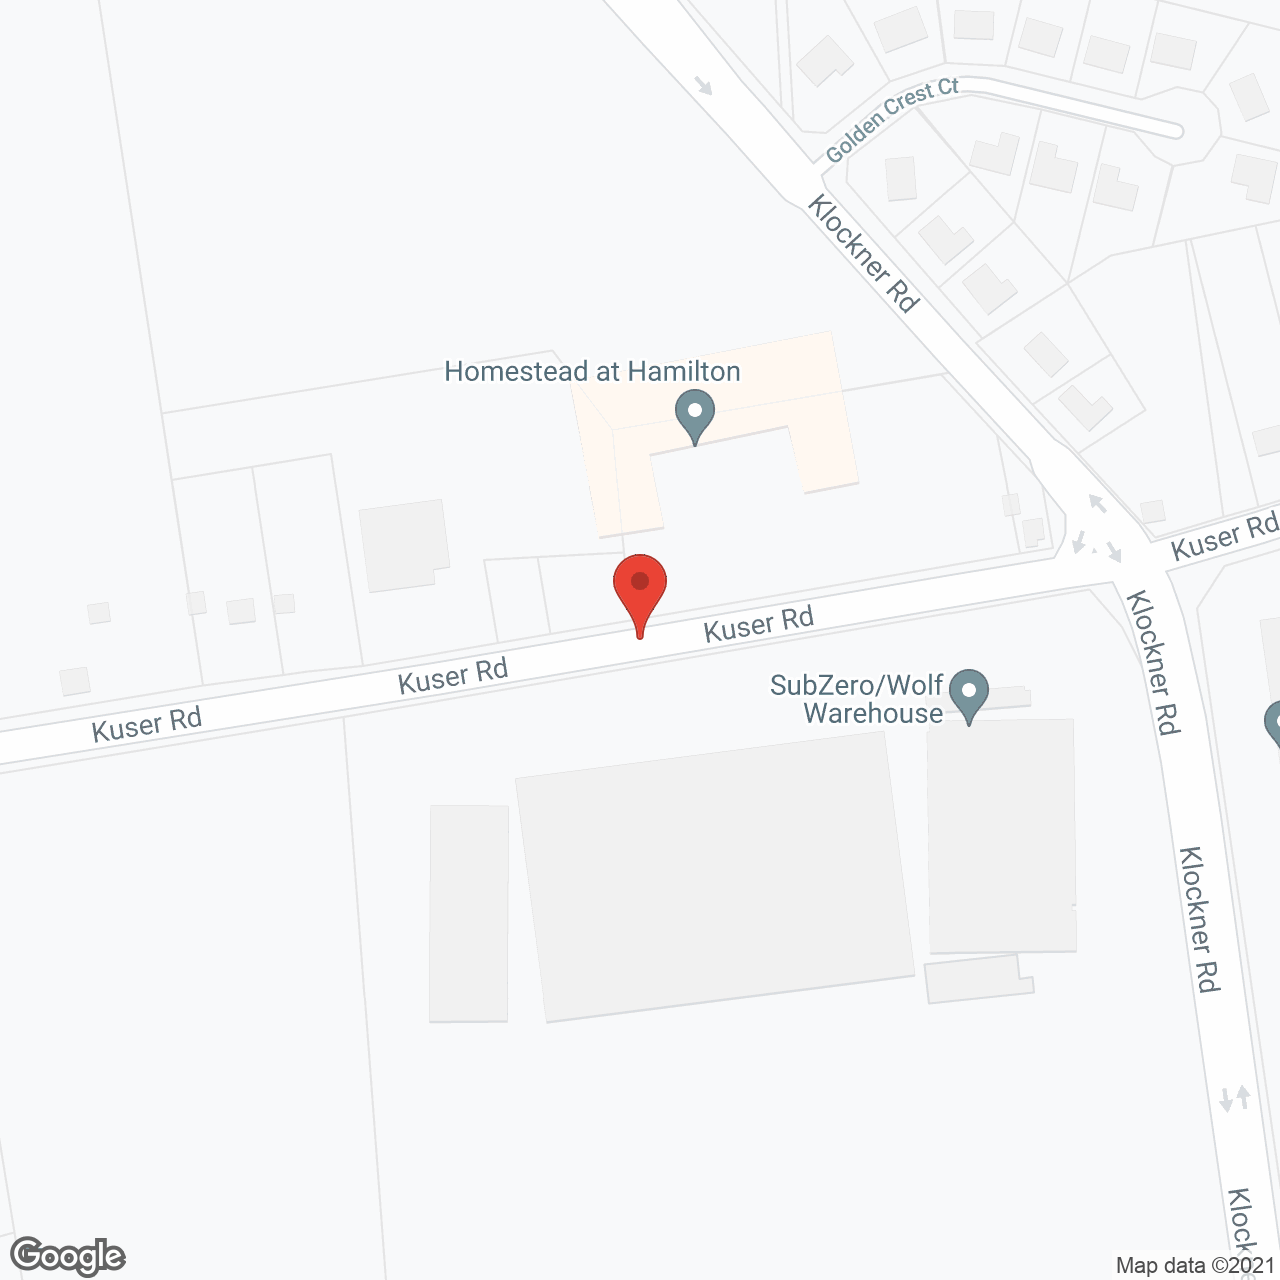 Homestead at Hamilton in google map